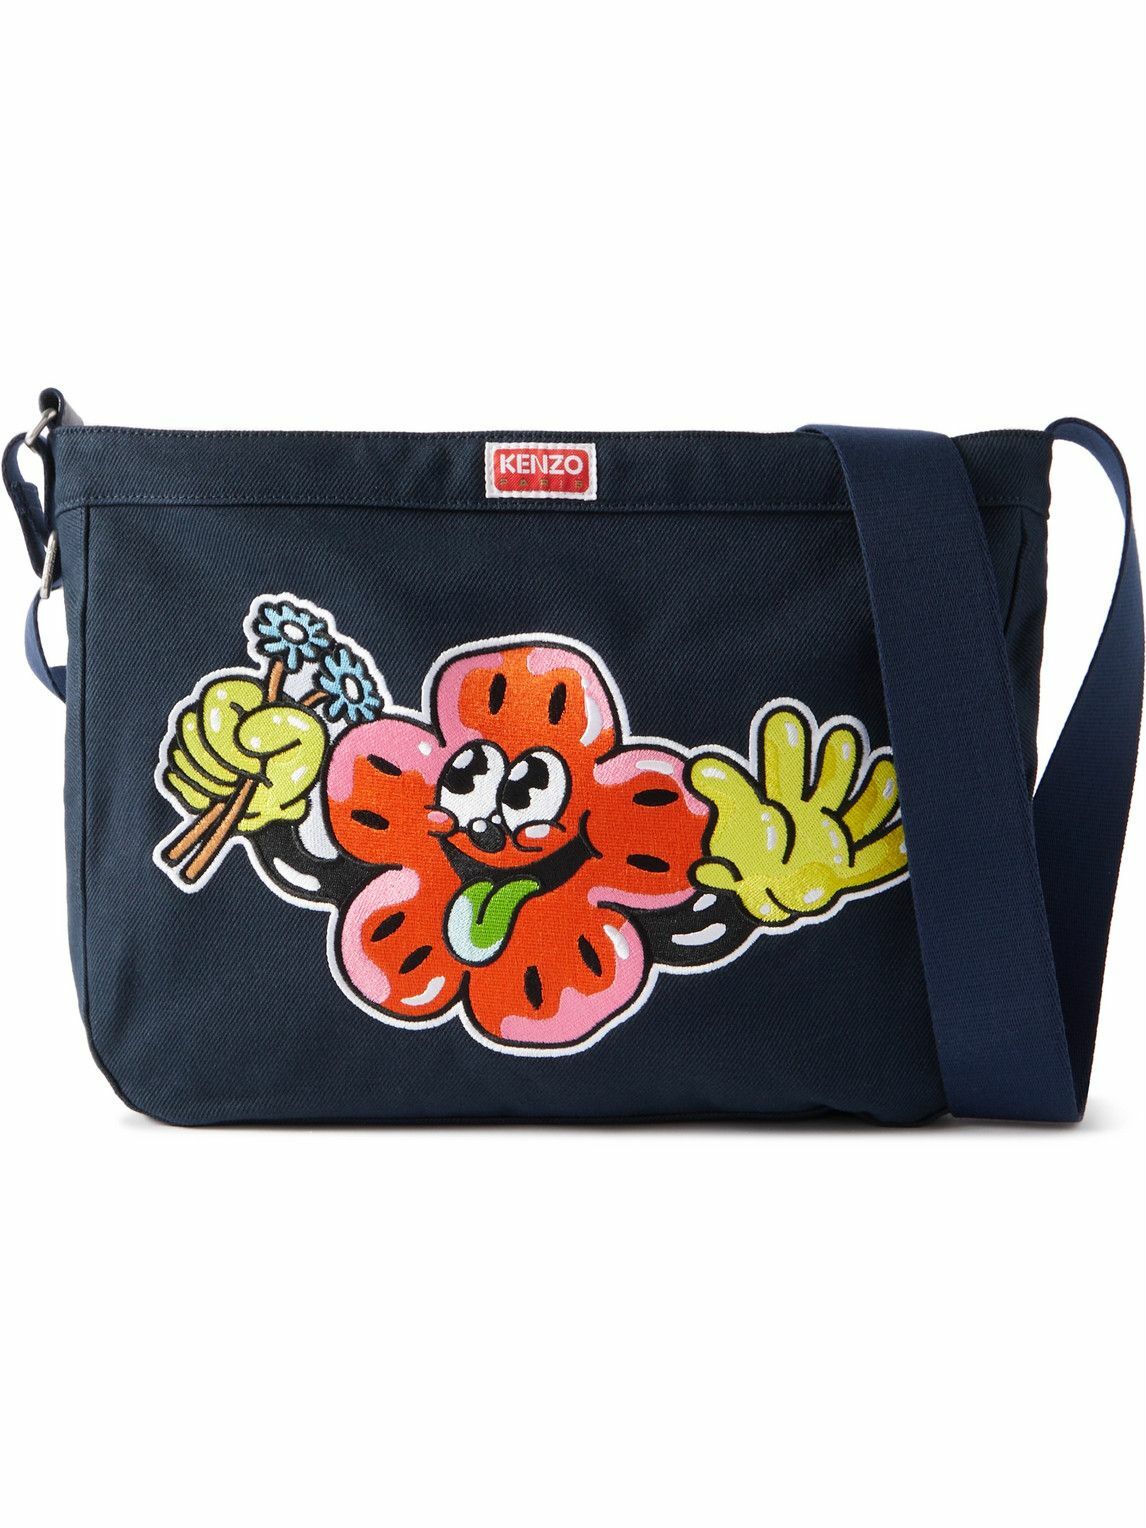 KENZO - Logo-Embroidered Canvas Messenger Bag Kenzo